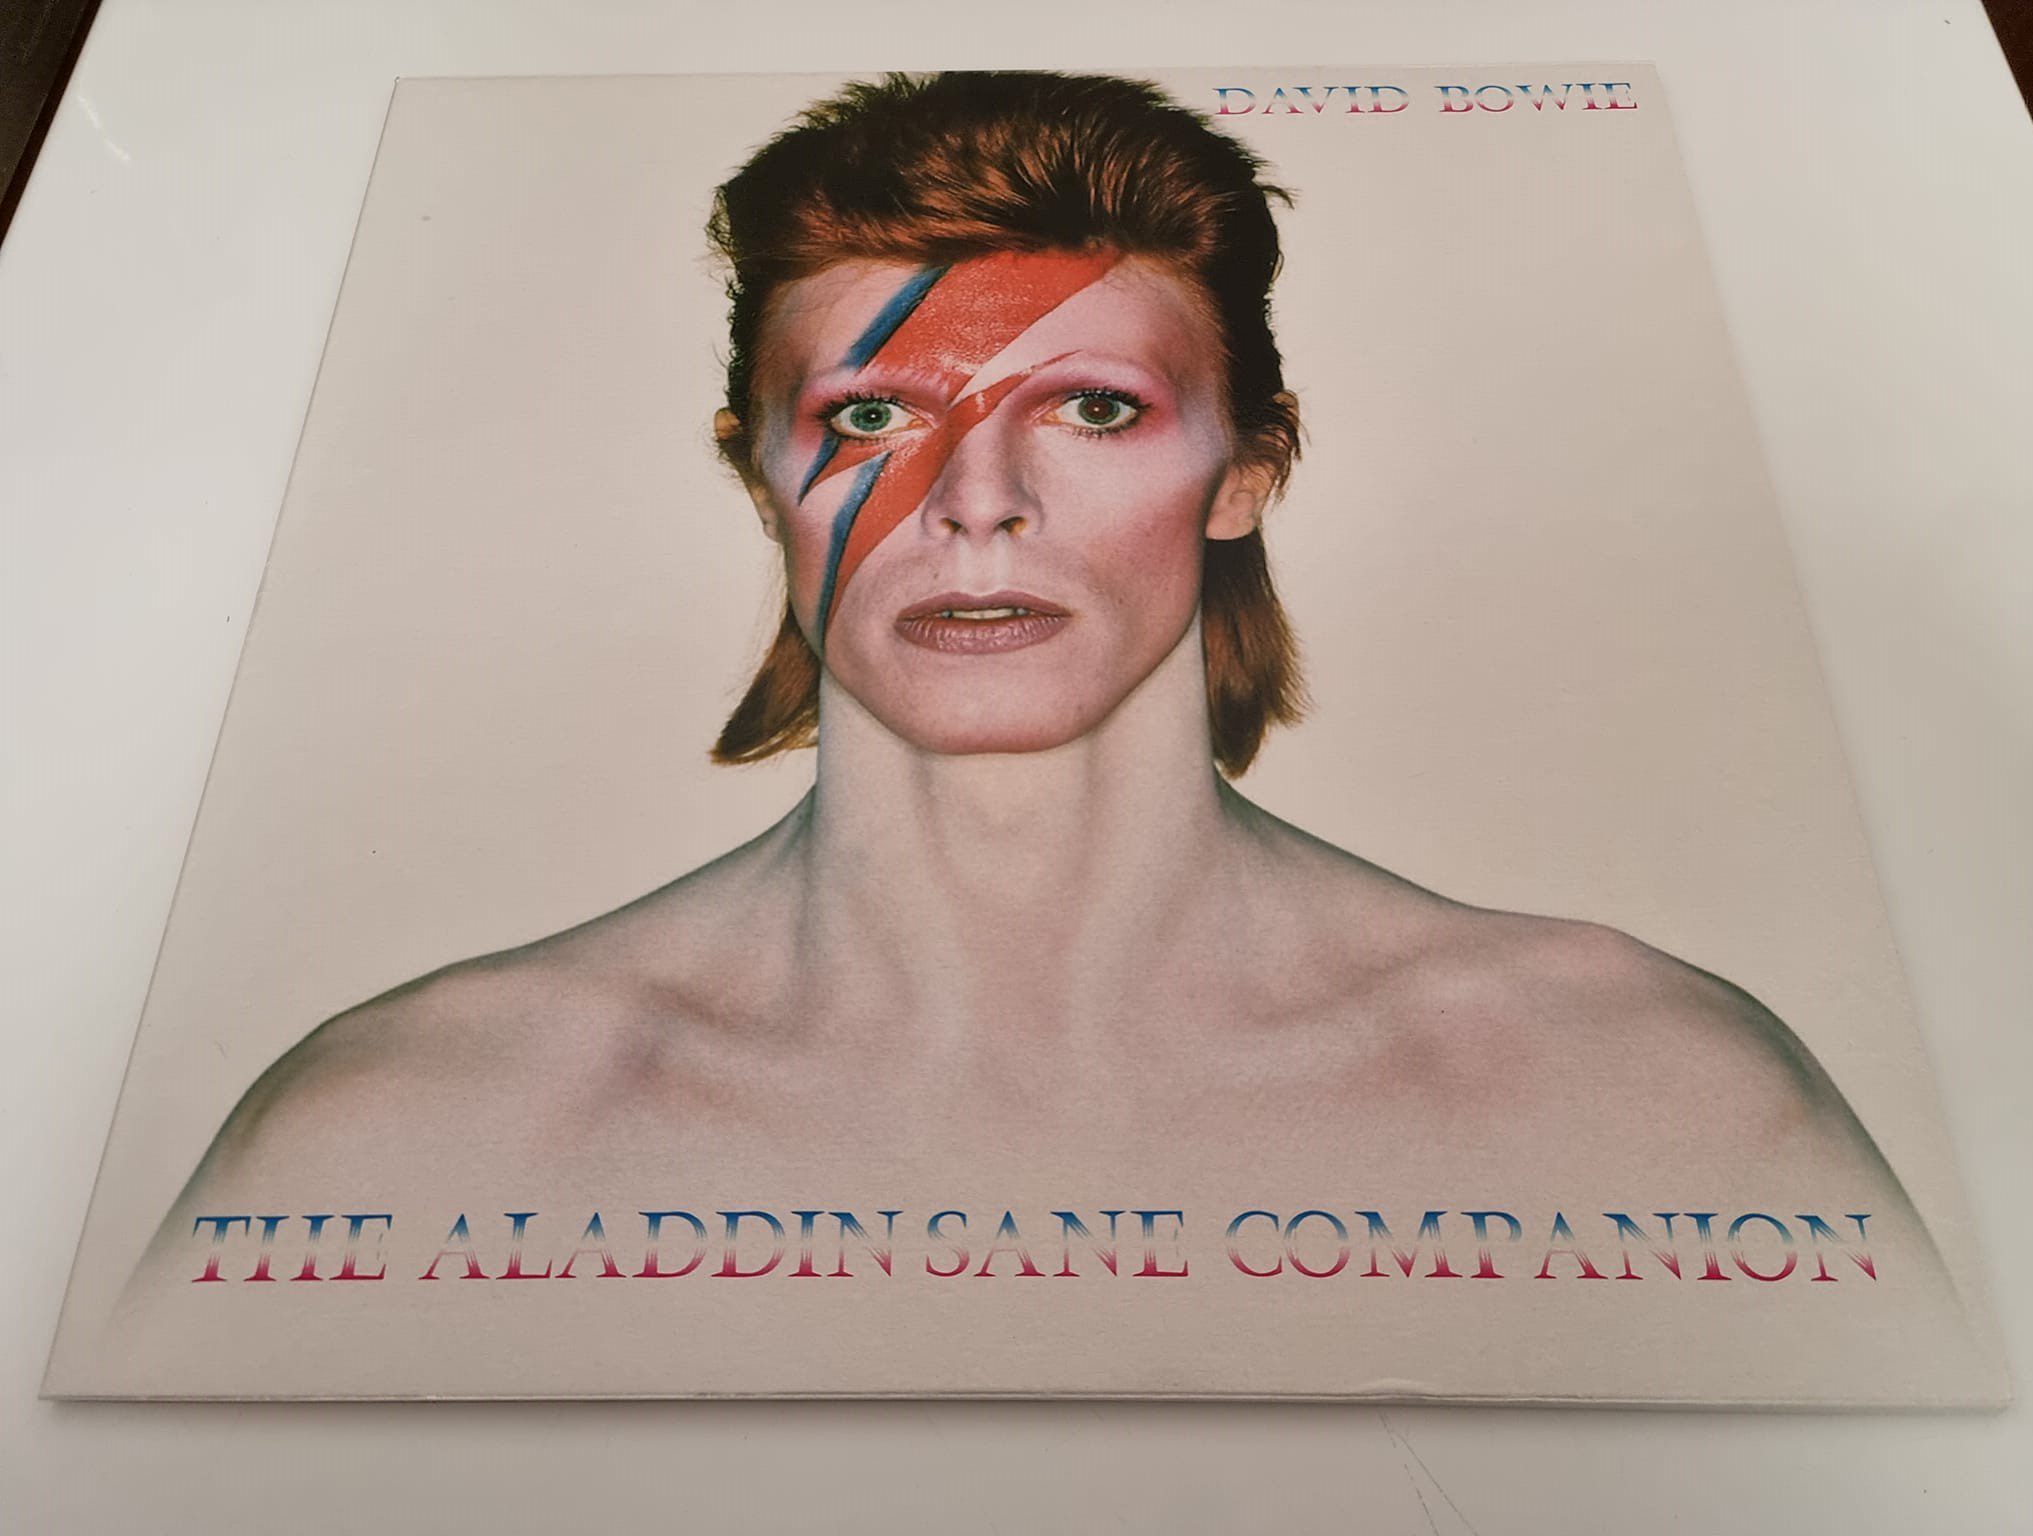 David Bowie - The Aladdin Sane Companion - LP Record Vinyl Album